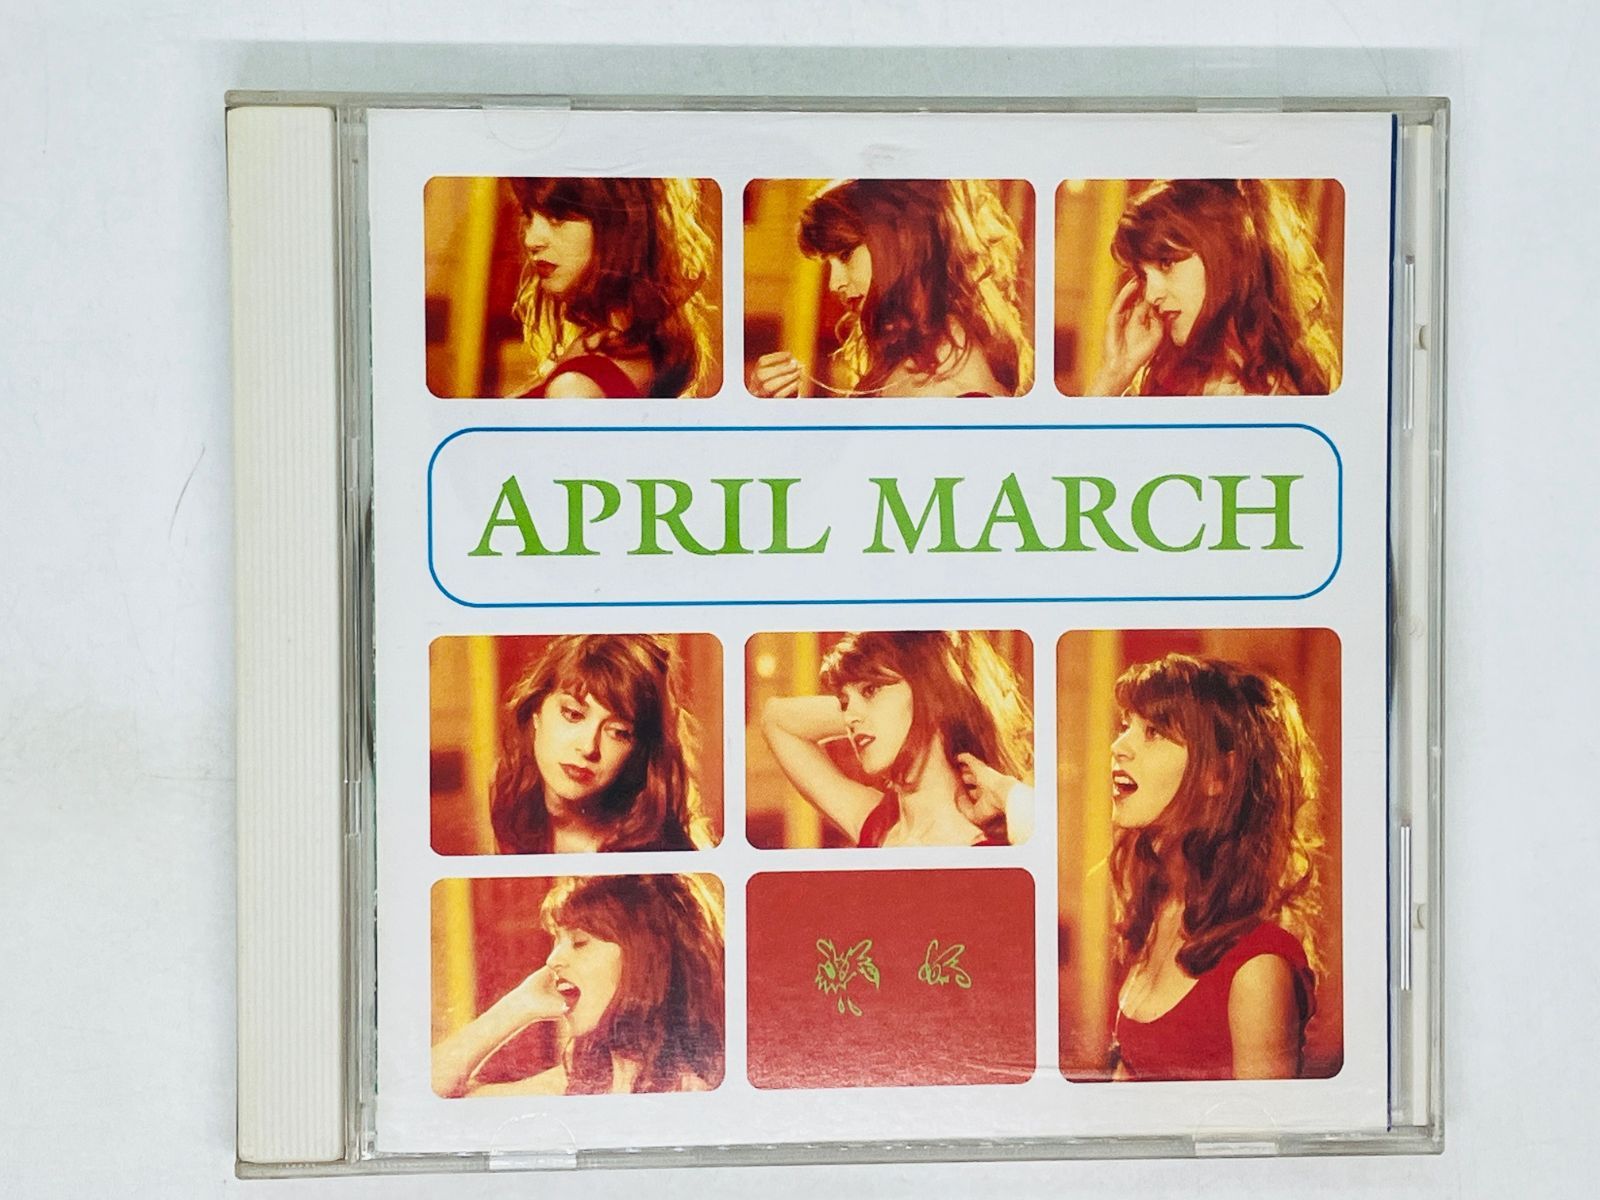 CD APRIL MARCH エイプリルマーチ PARIS IN APRIL / chick habit フレンチポップス アルバム レア F02 -  メルカリ